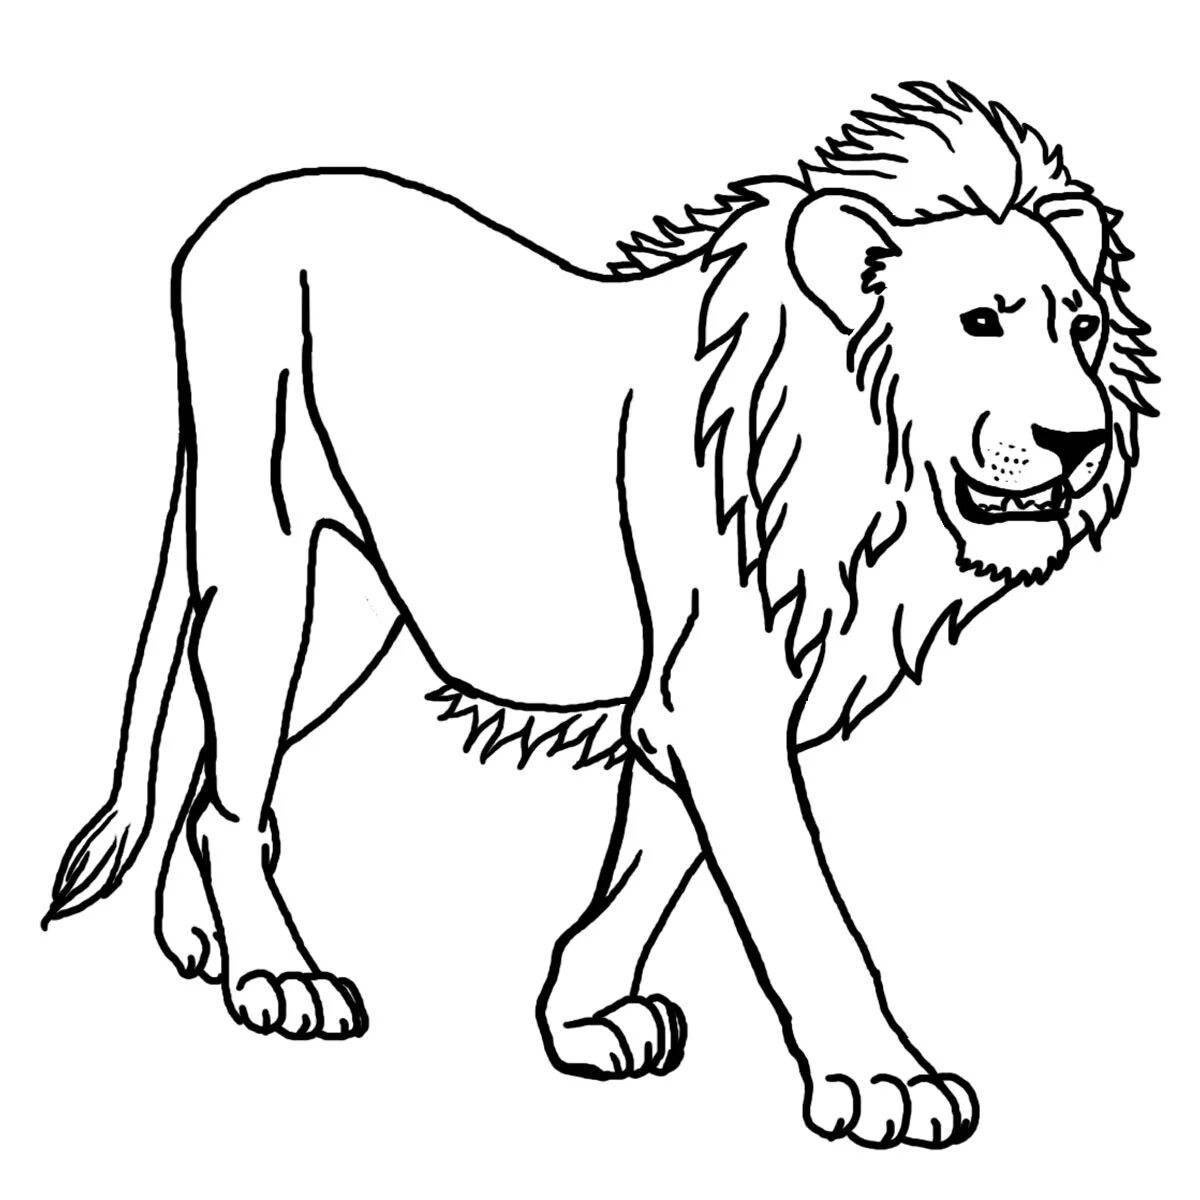 Joyful lion coloring pages for kids